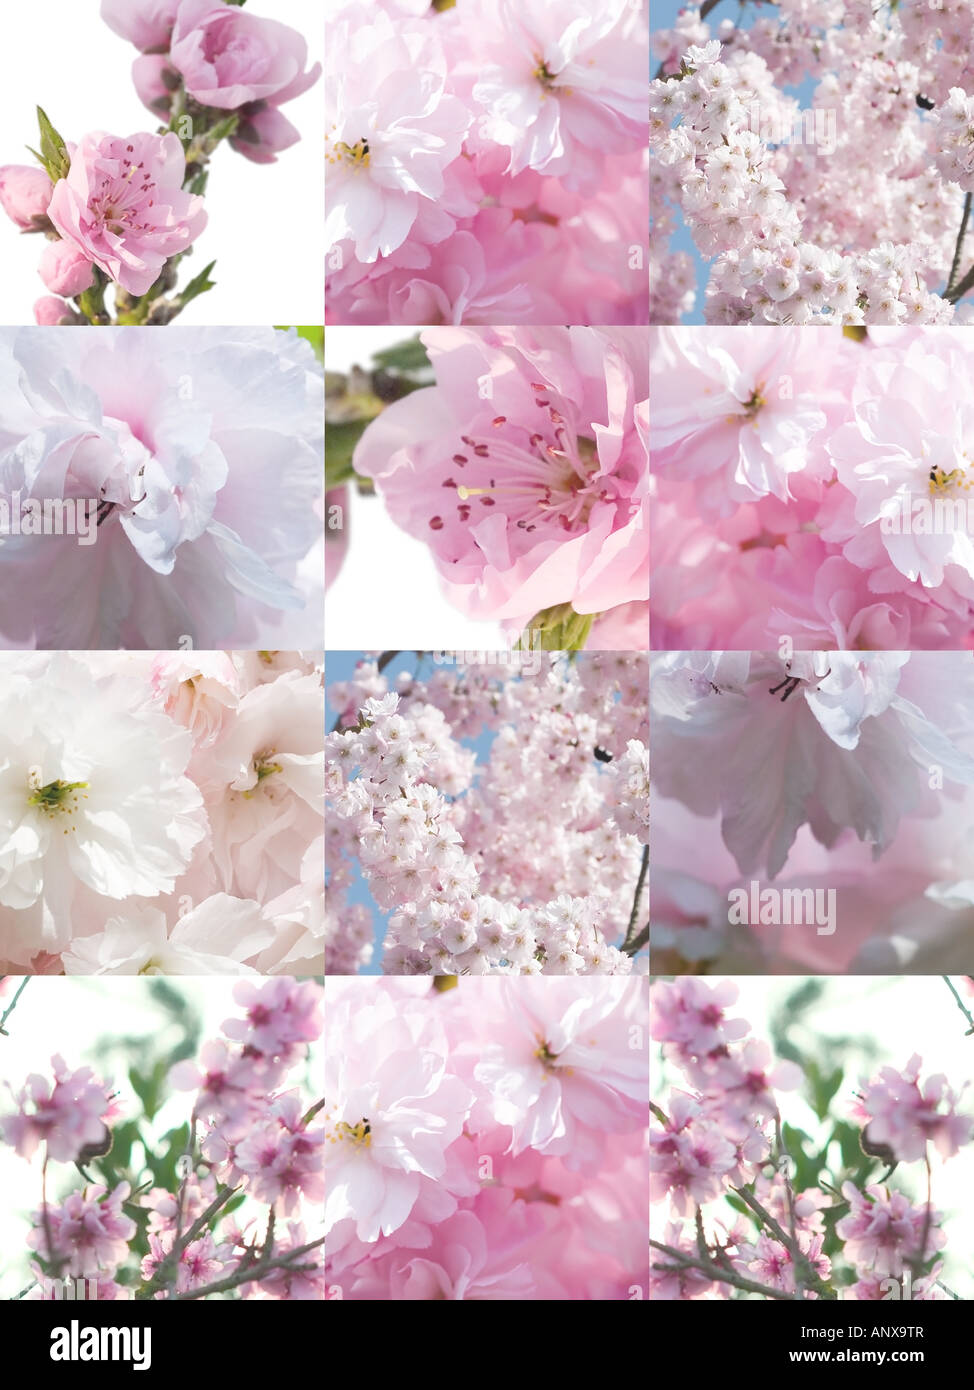 Cherry blossoms (high key + up) - Stock Photo [29518230] - PIXTA